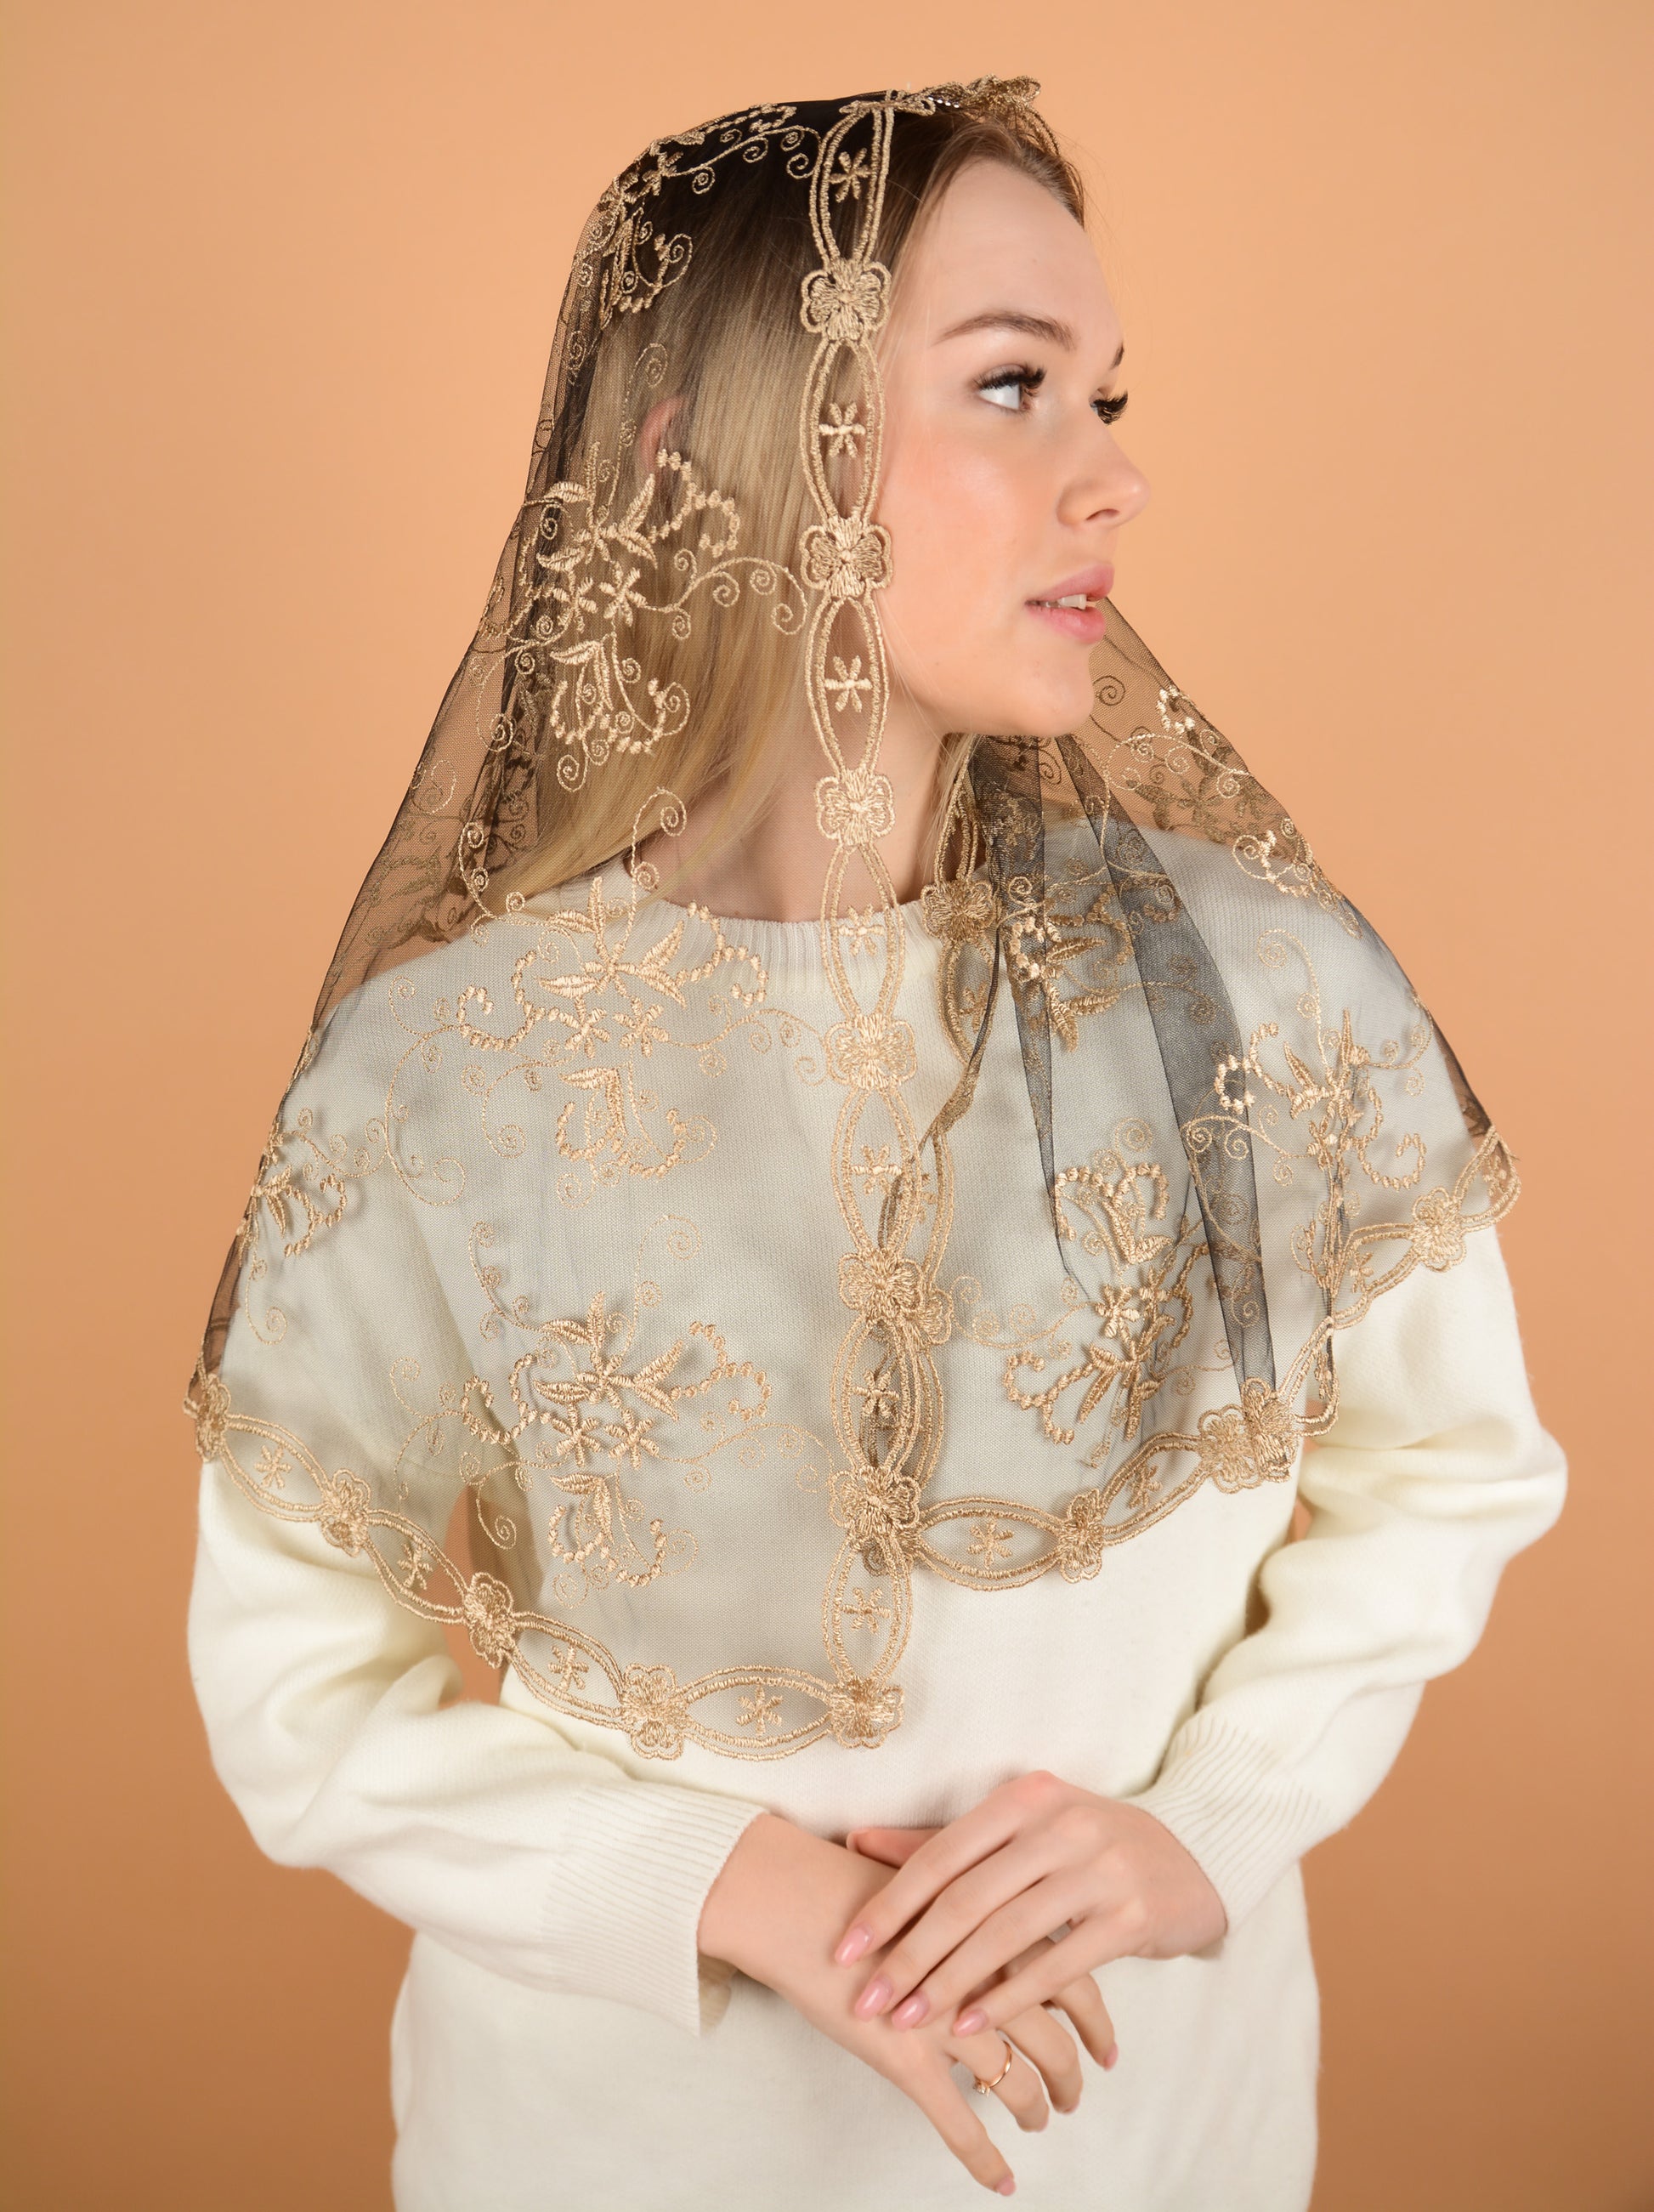 Gold lace veil - MariaVeils